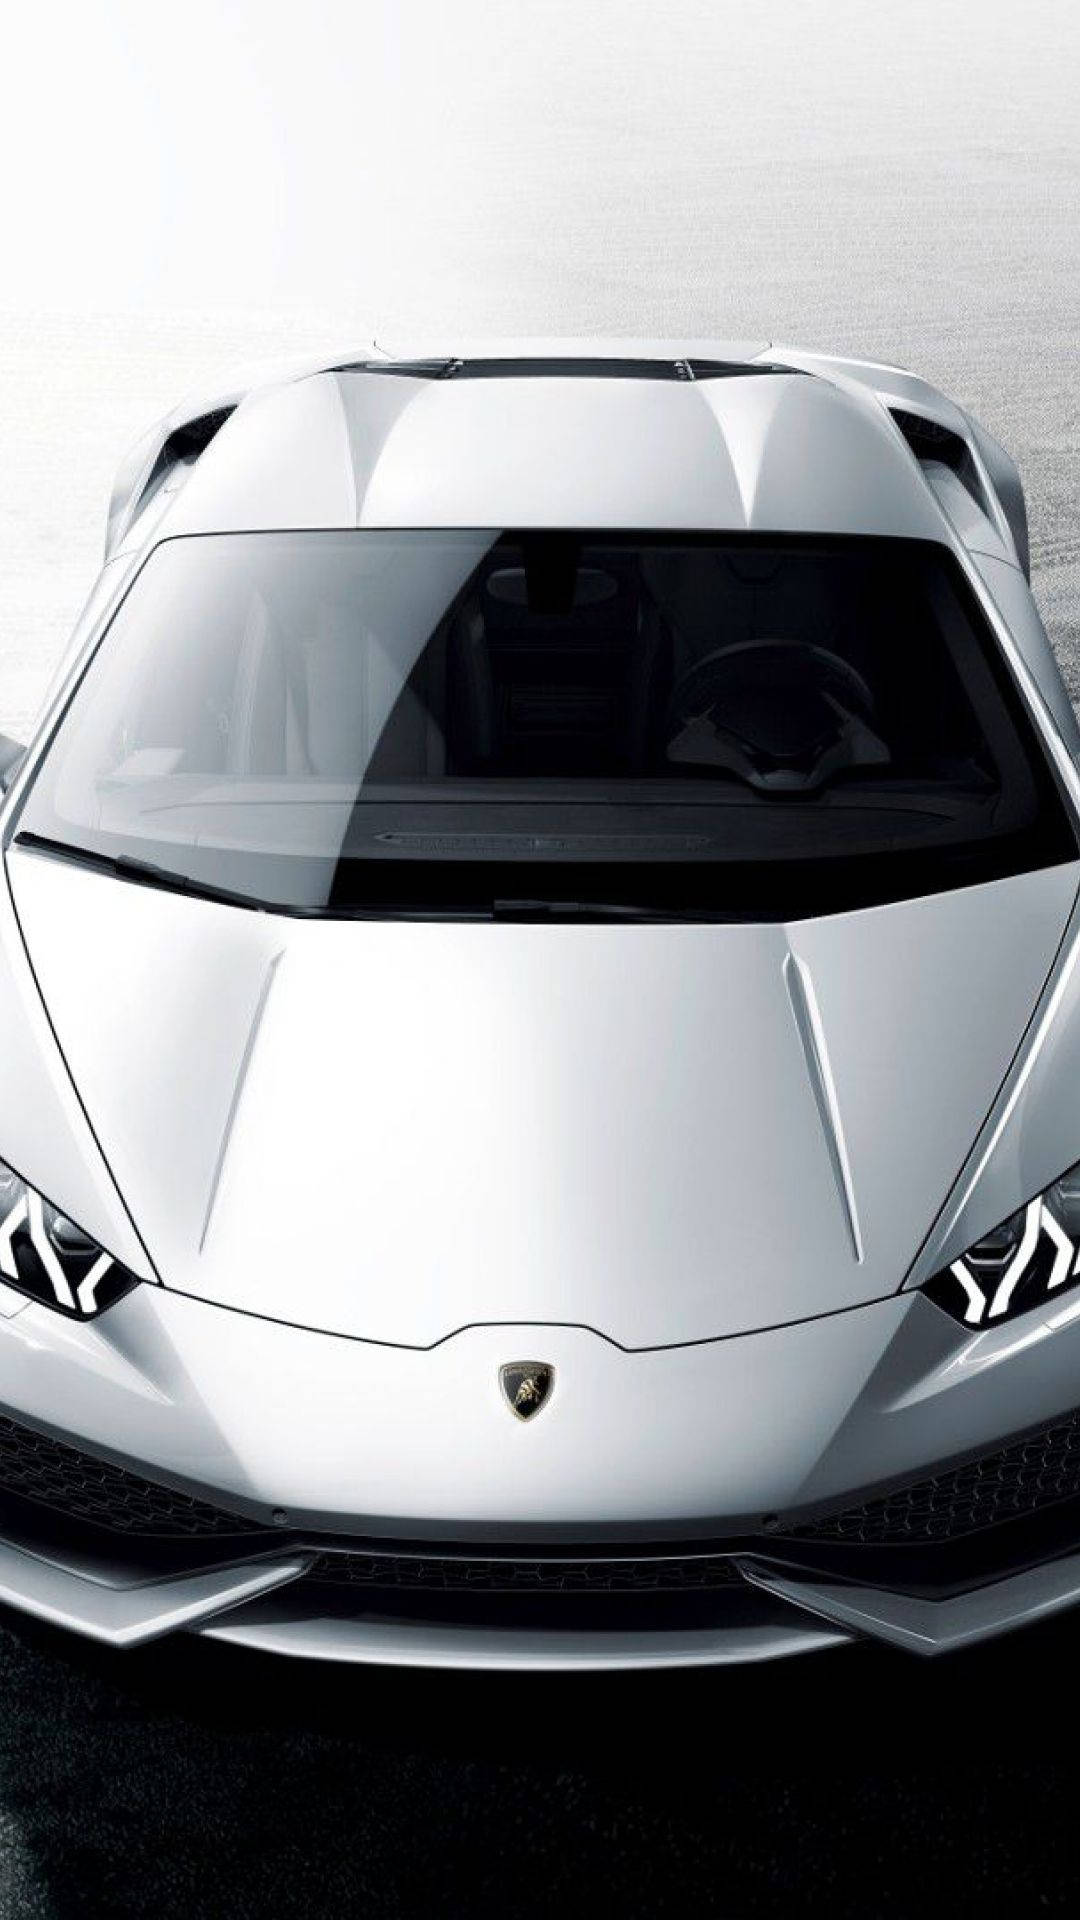 Lamborghini iPhone White Aesthetic Top View Wallpaper